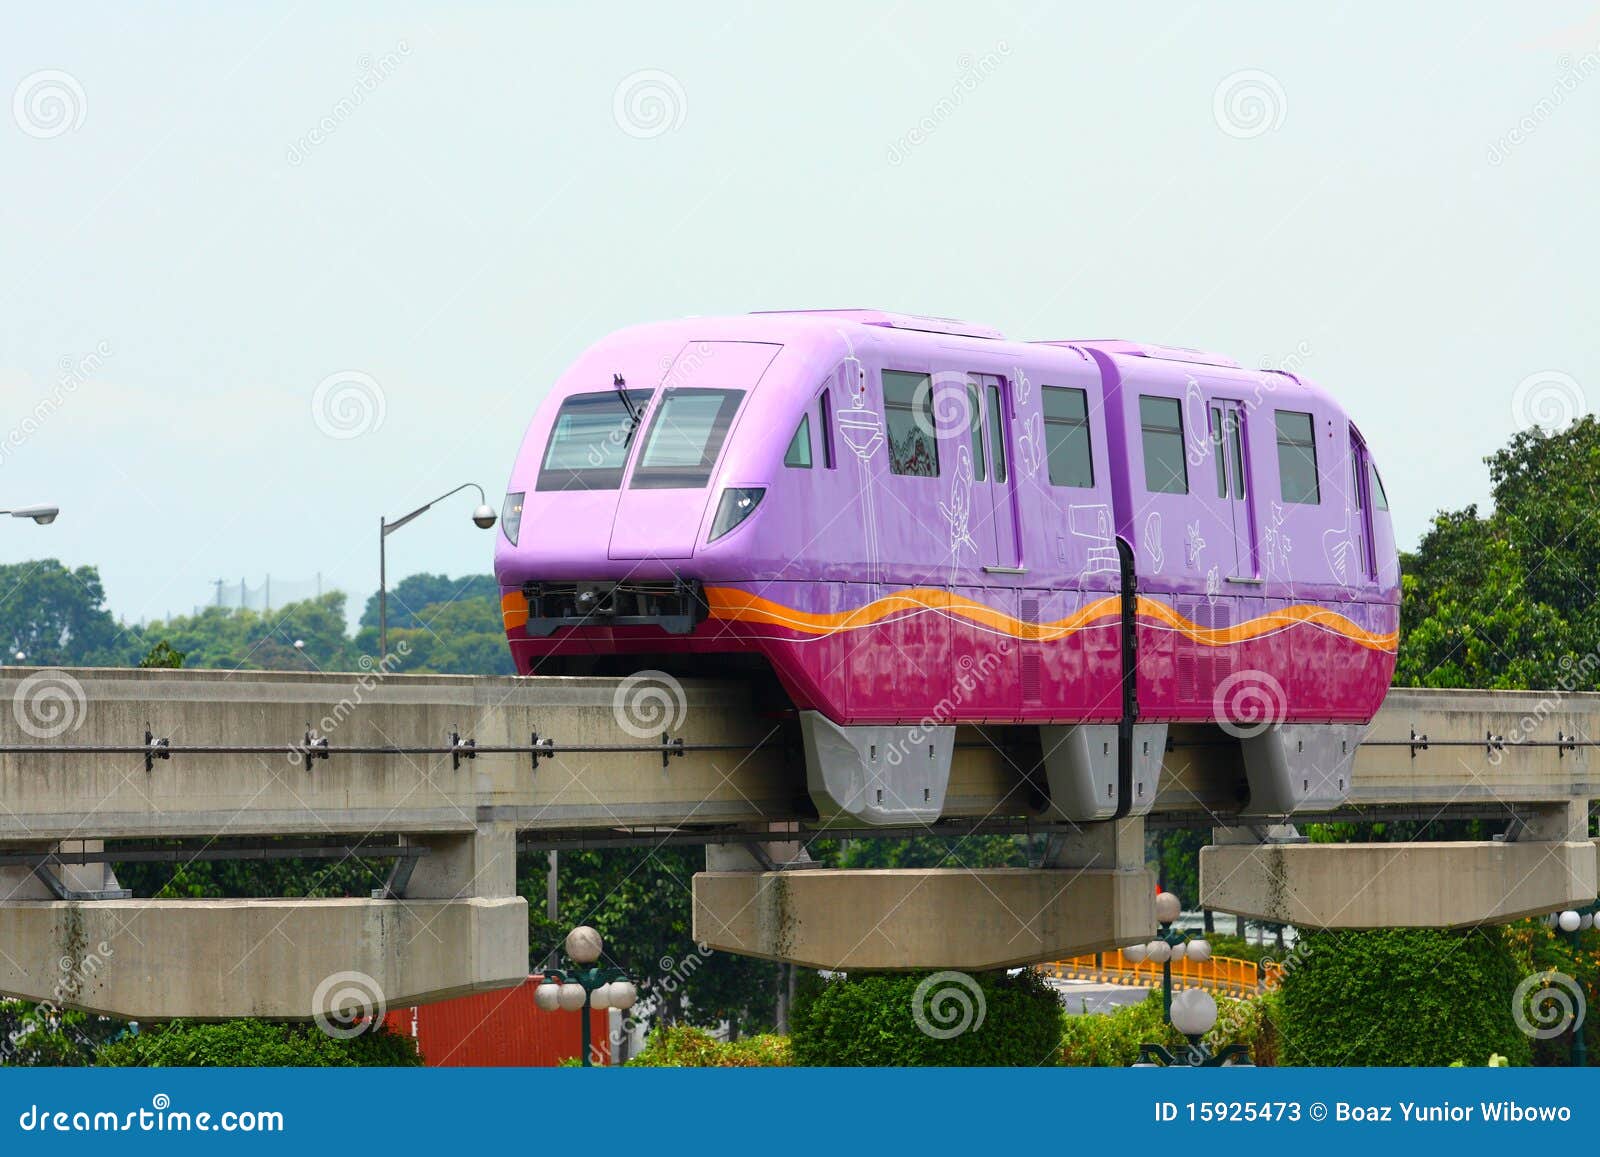 purple monorail